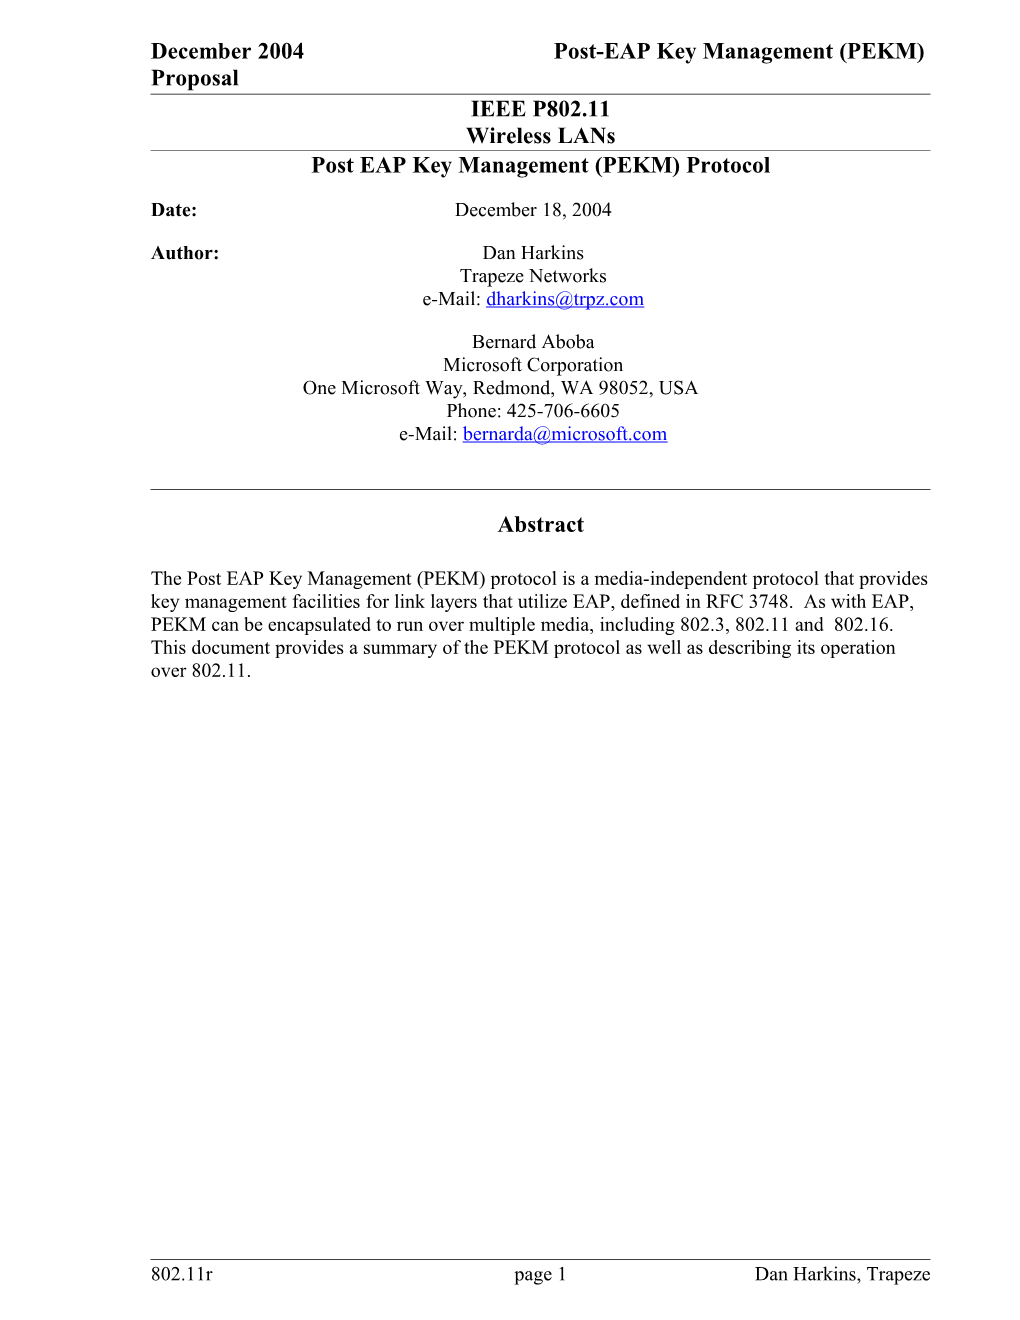 Post-EAP Key Management (PEKM) Proposal